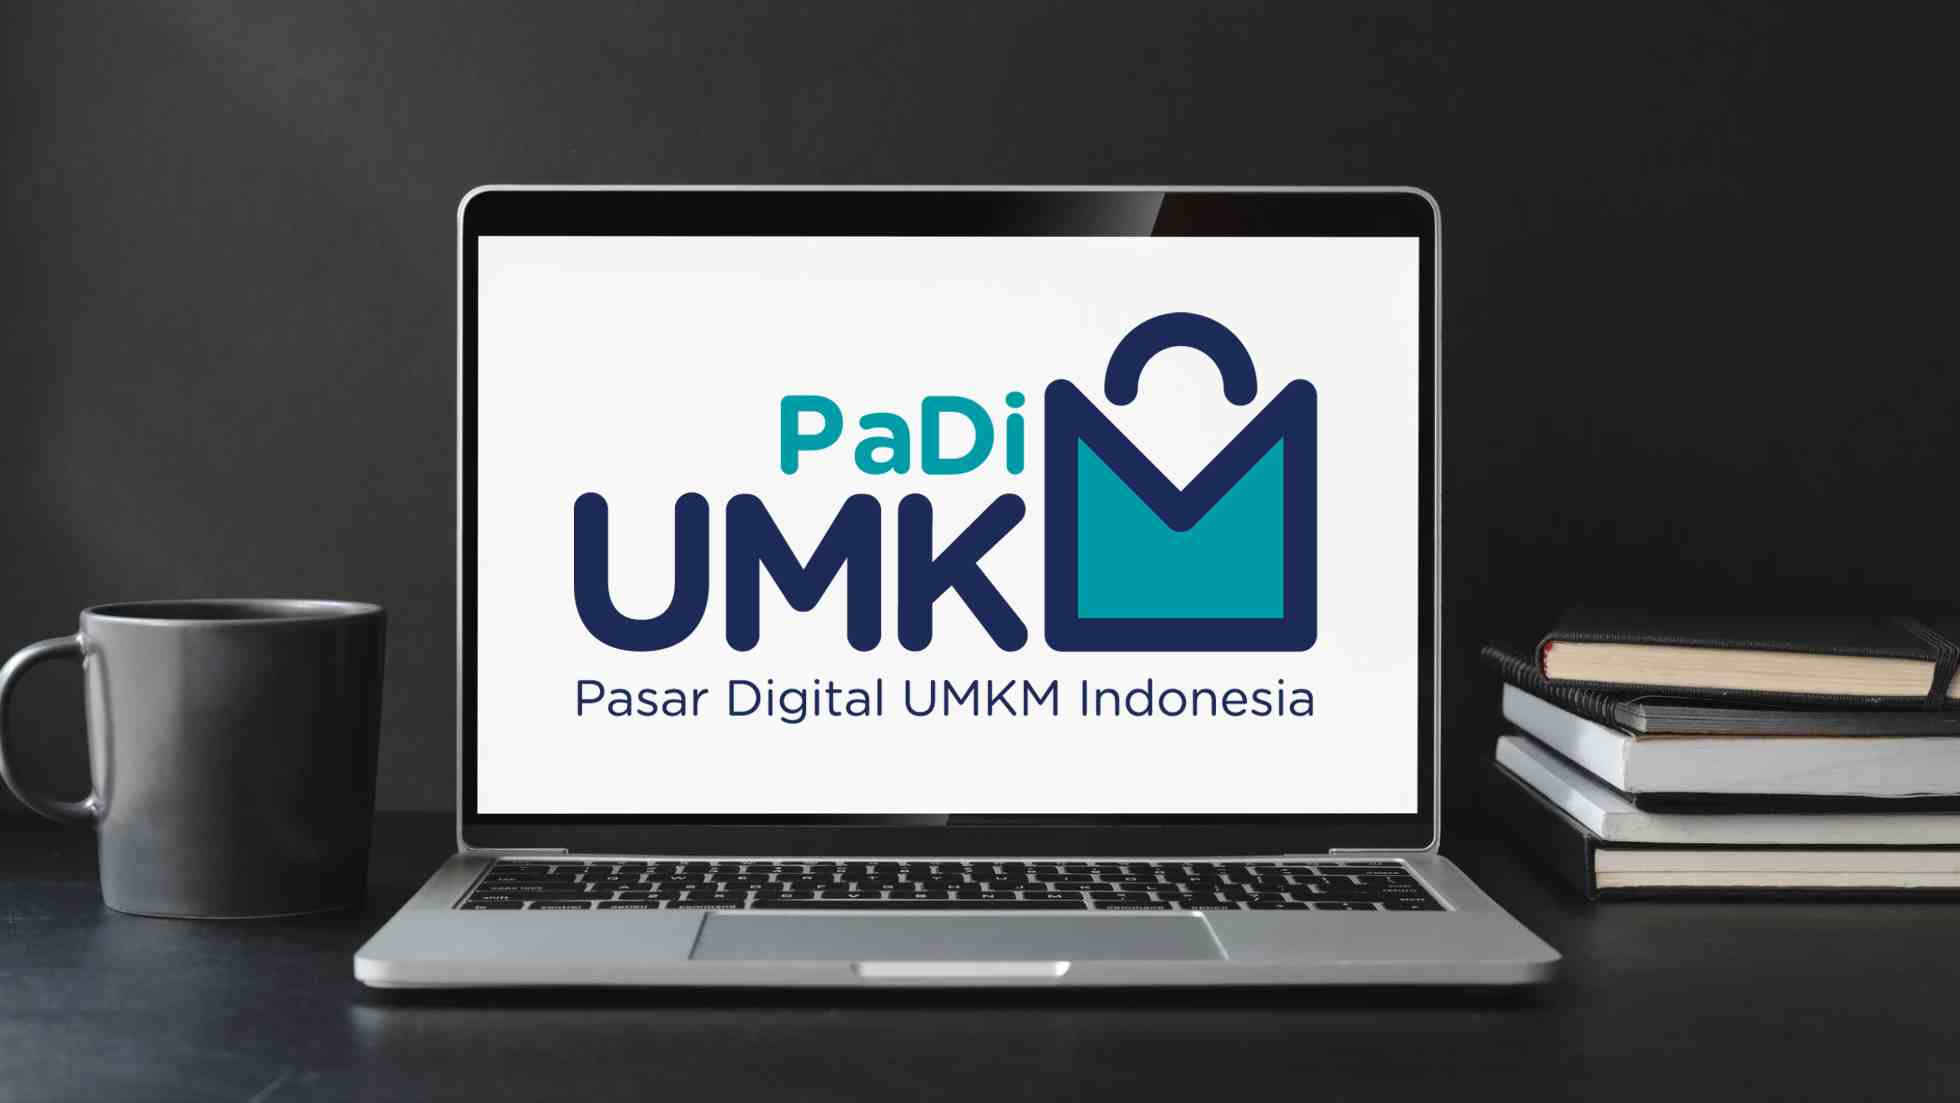 Padi UMKM Telkom Indonesia